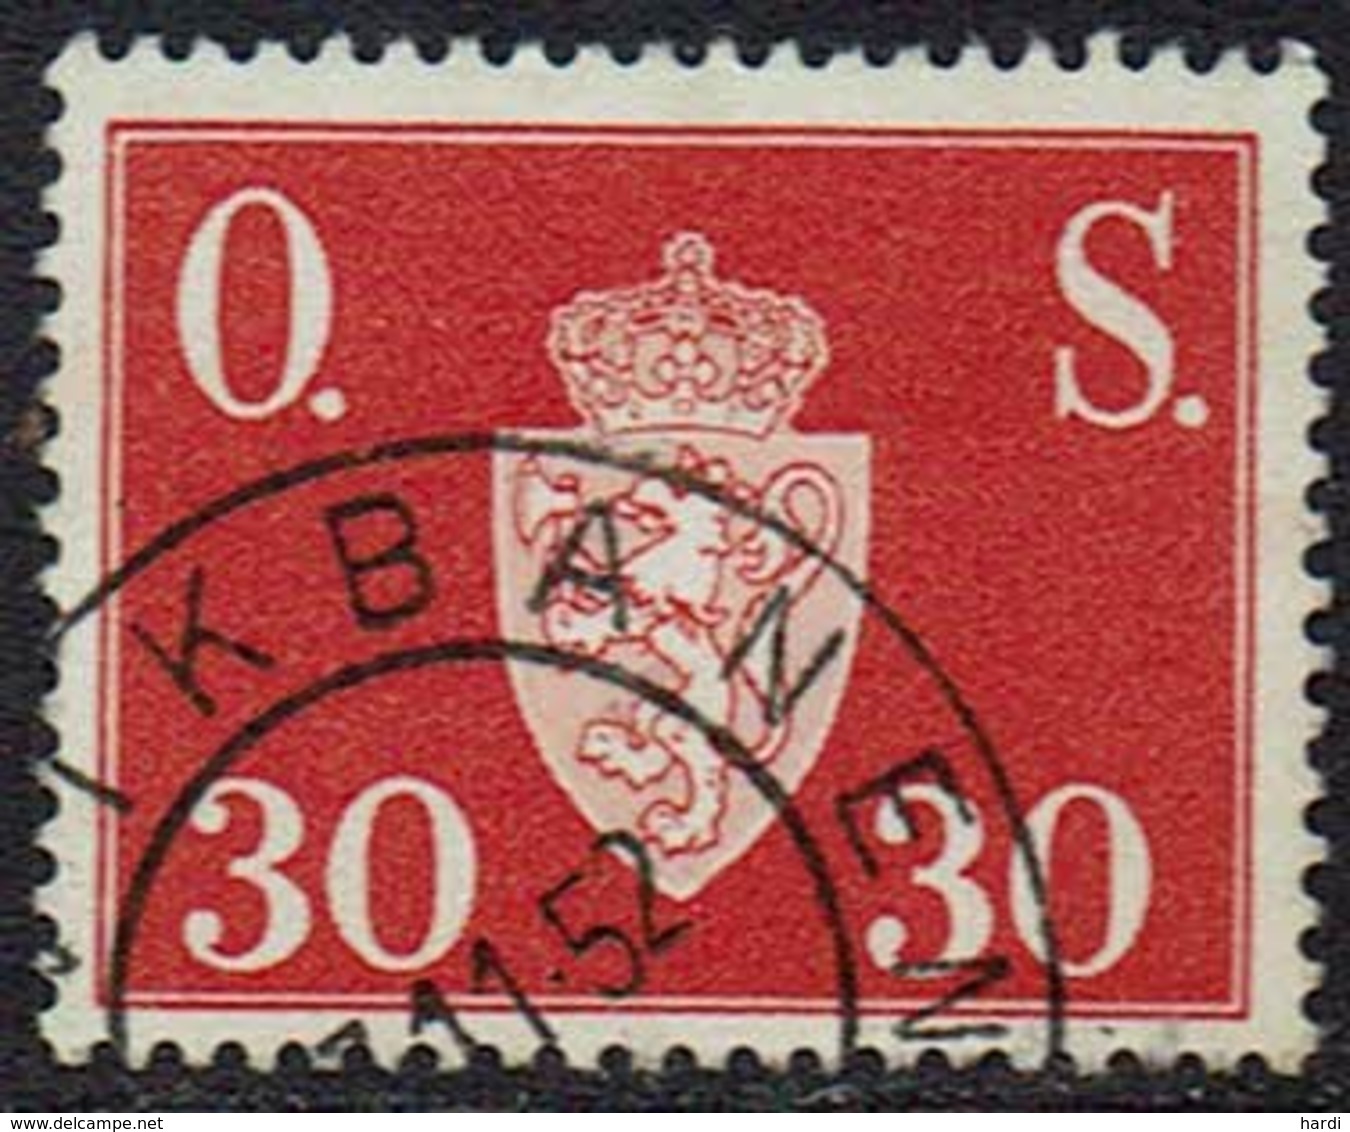 Norwegen DM, 1951, MiNr 64, Gestempelt - Dienstmarken